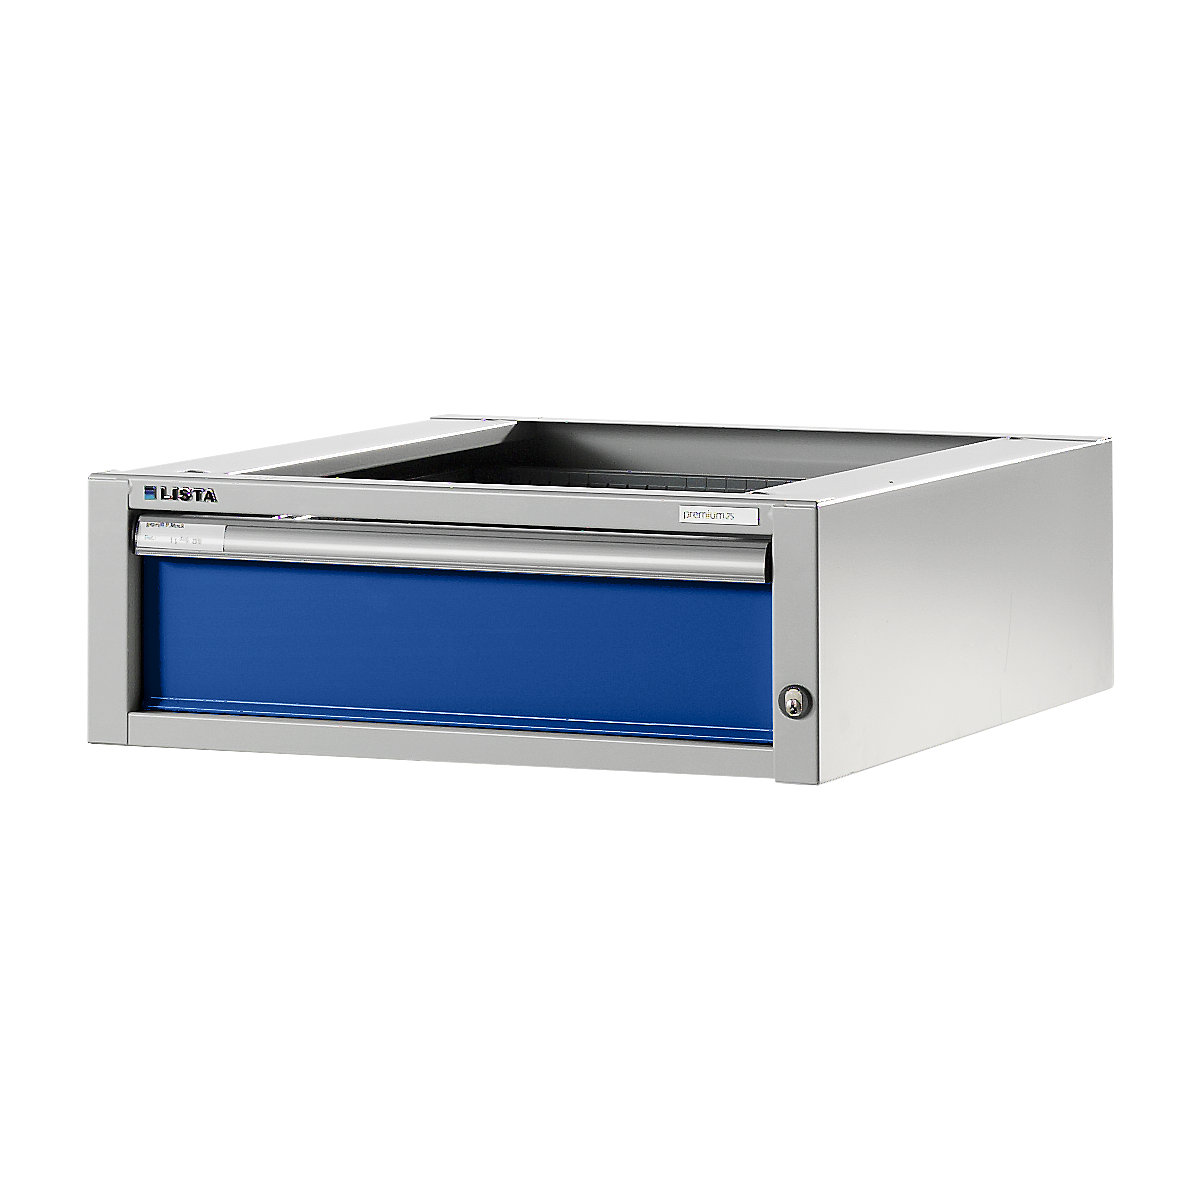 Modular workbench system, drawer unit – LISTA, height 204 mm, 1 drawer, gentian blue-5